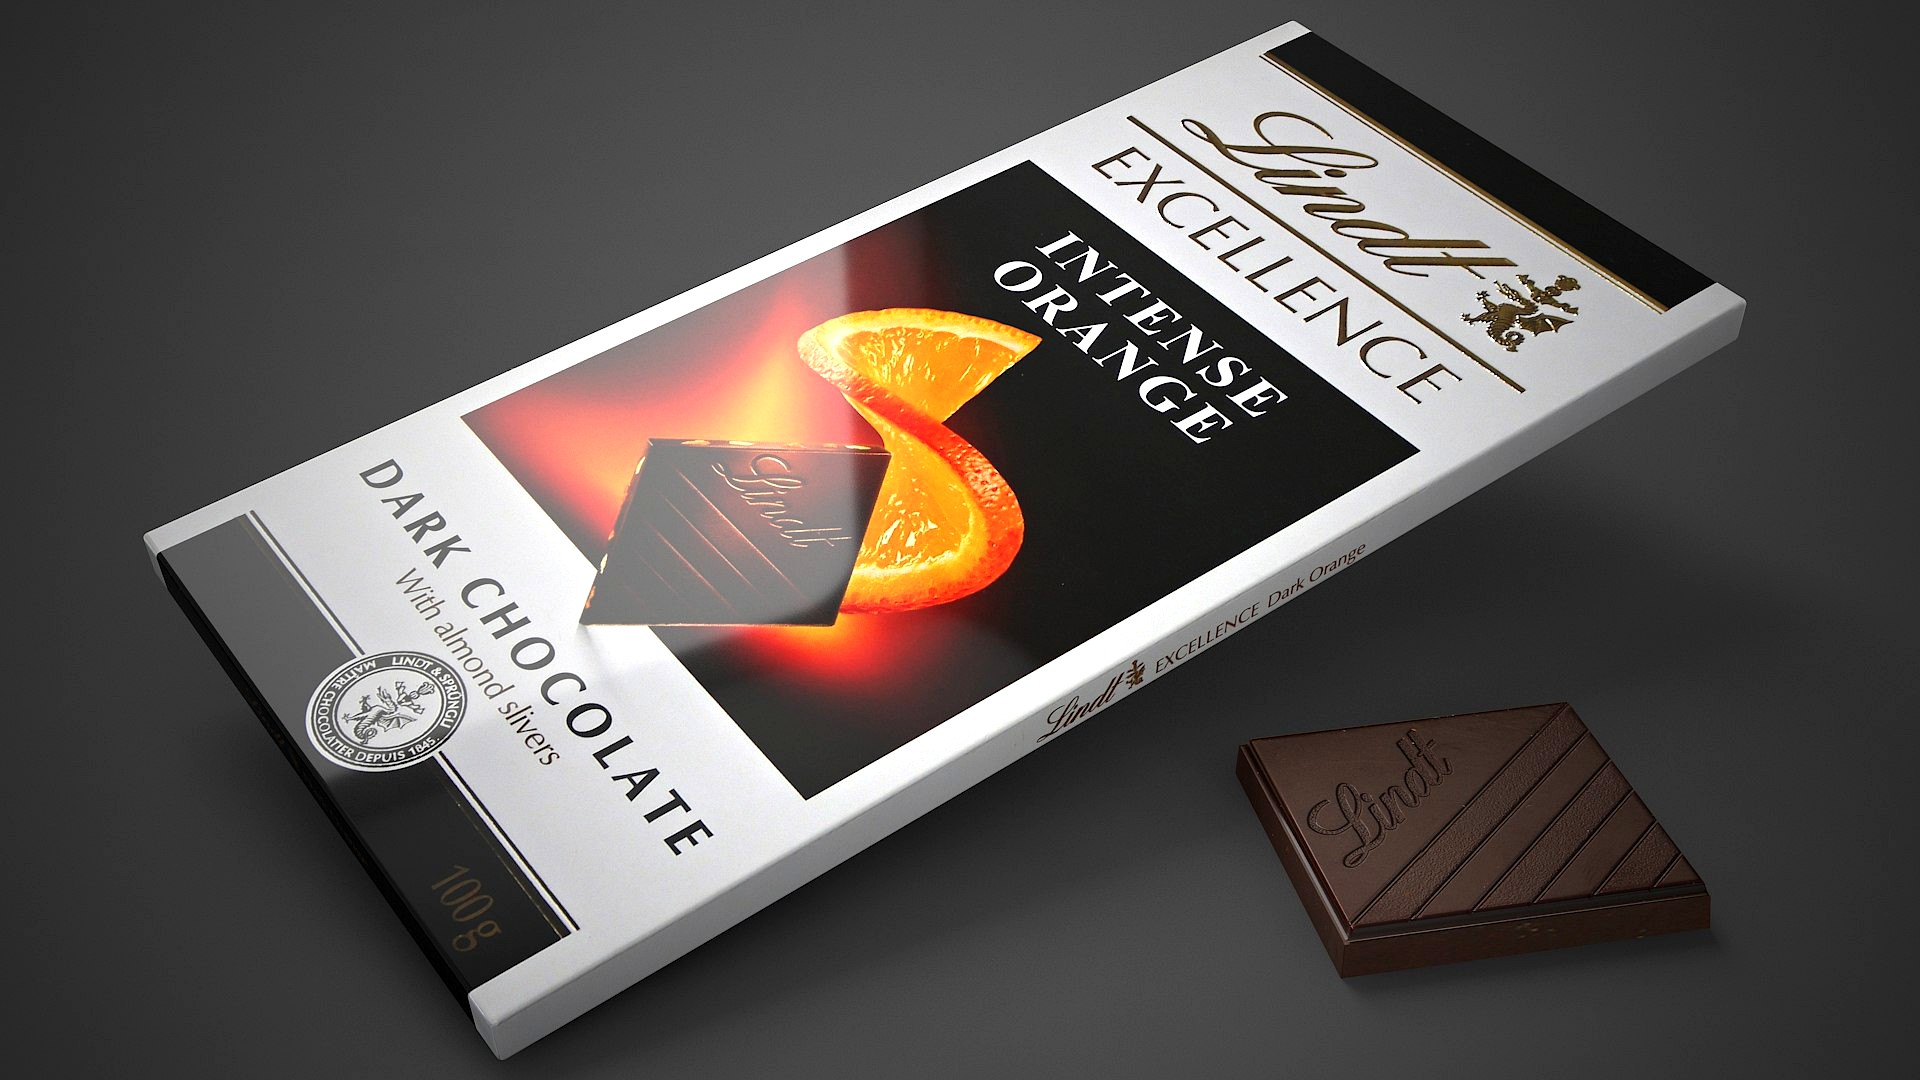 Lindt Excellence Intense Orange chocolate